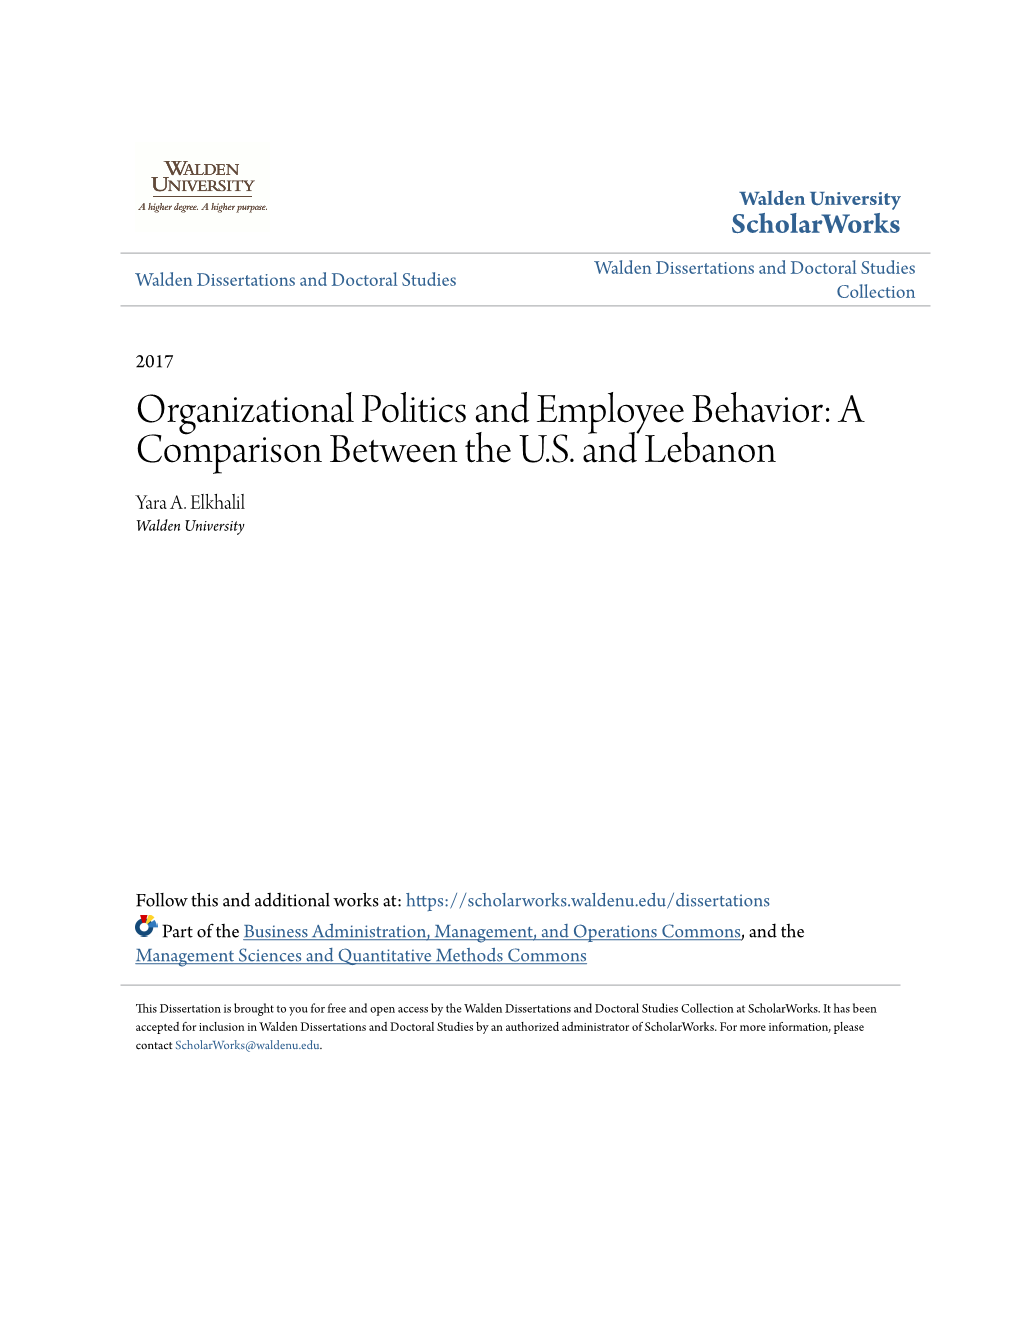 Organizational Politics and Employee Behavior: a Comparison Between the U.S